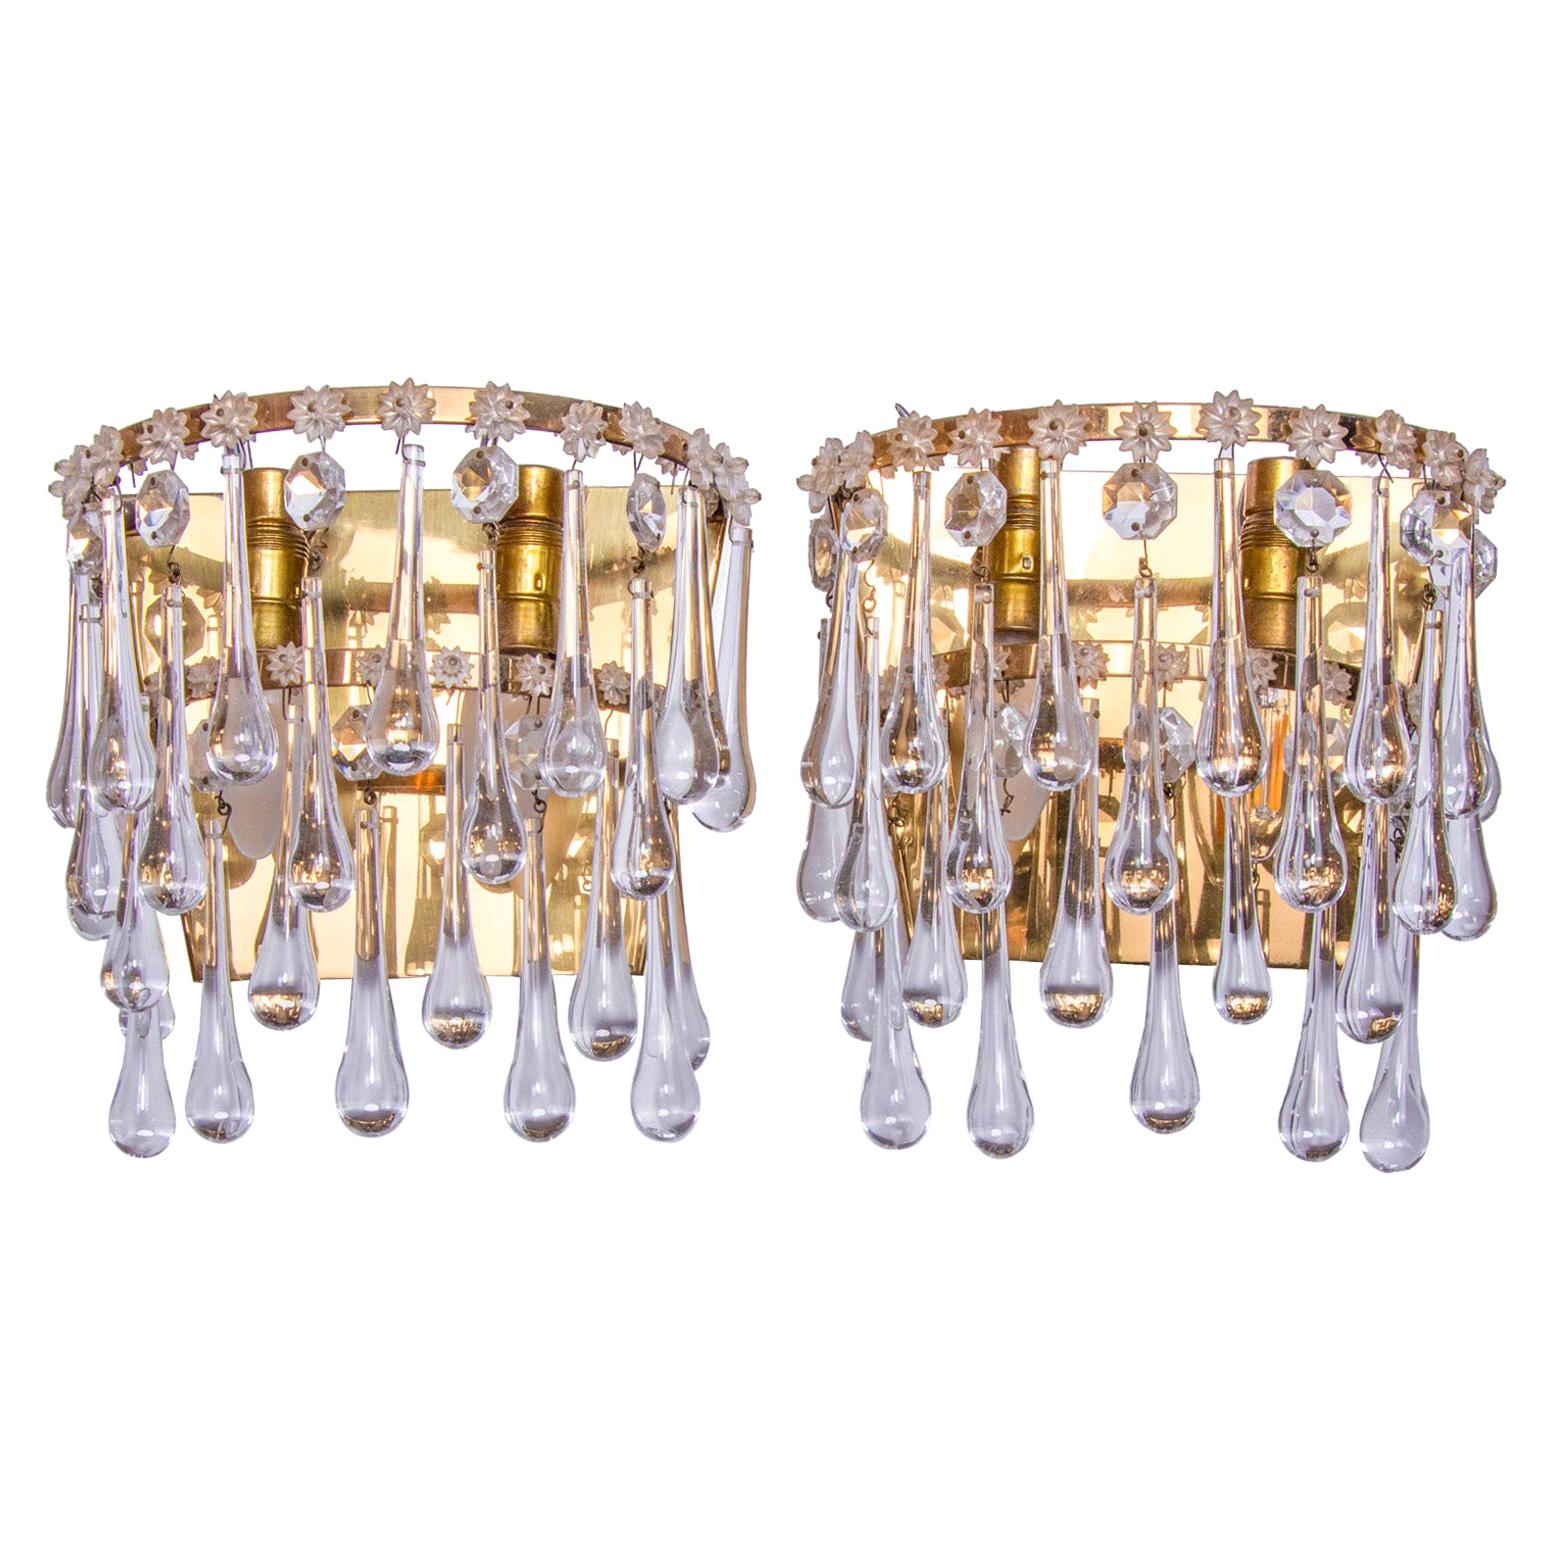 1960 Vintage Teardrop Wall Sconce Crystal Glass & Brass, Set of 2 For Sale